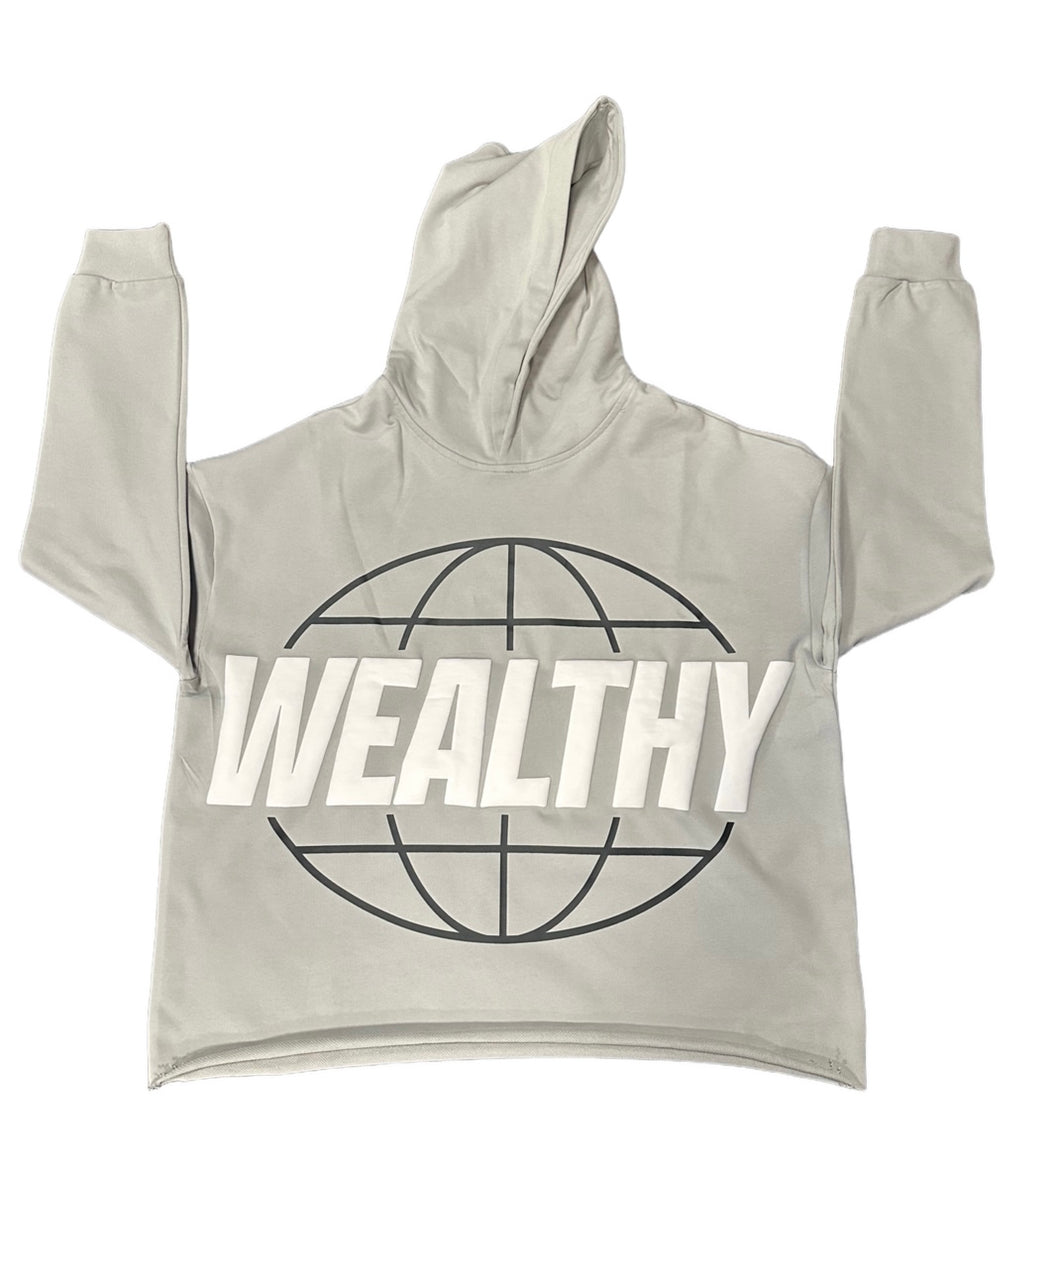 Wealthy Cropped Hoodie (Grey/Black/White)